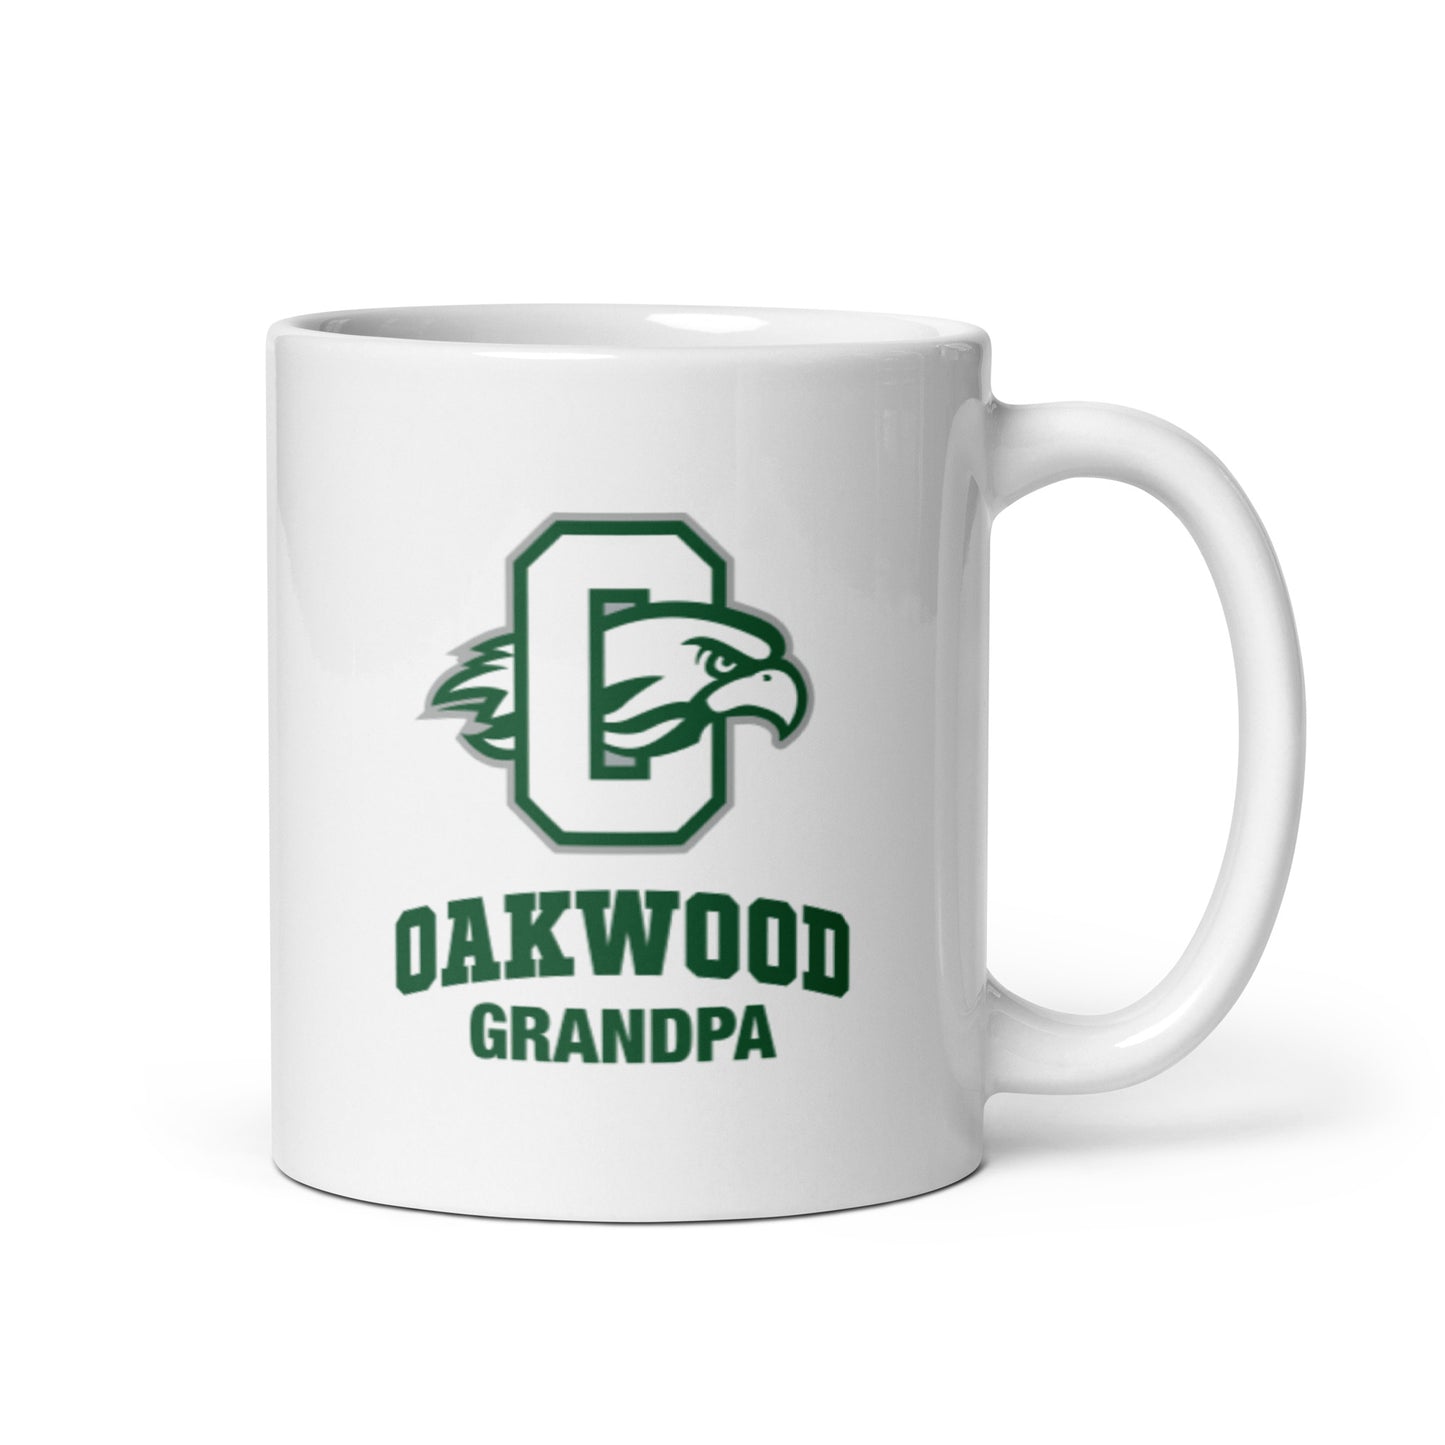 Oakwood Grandpa Mug